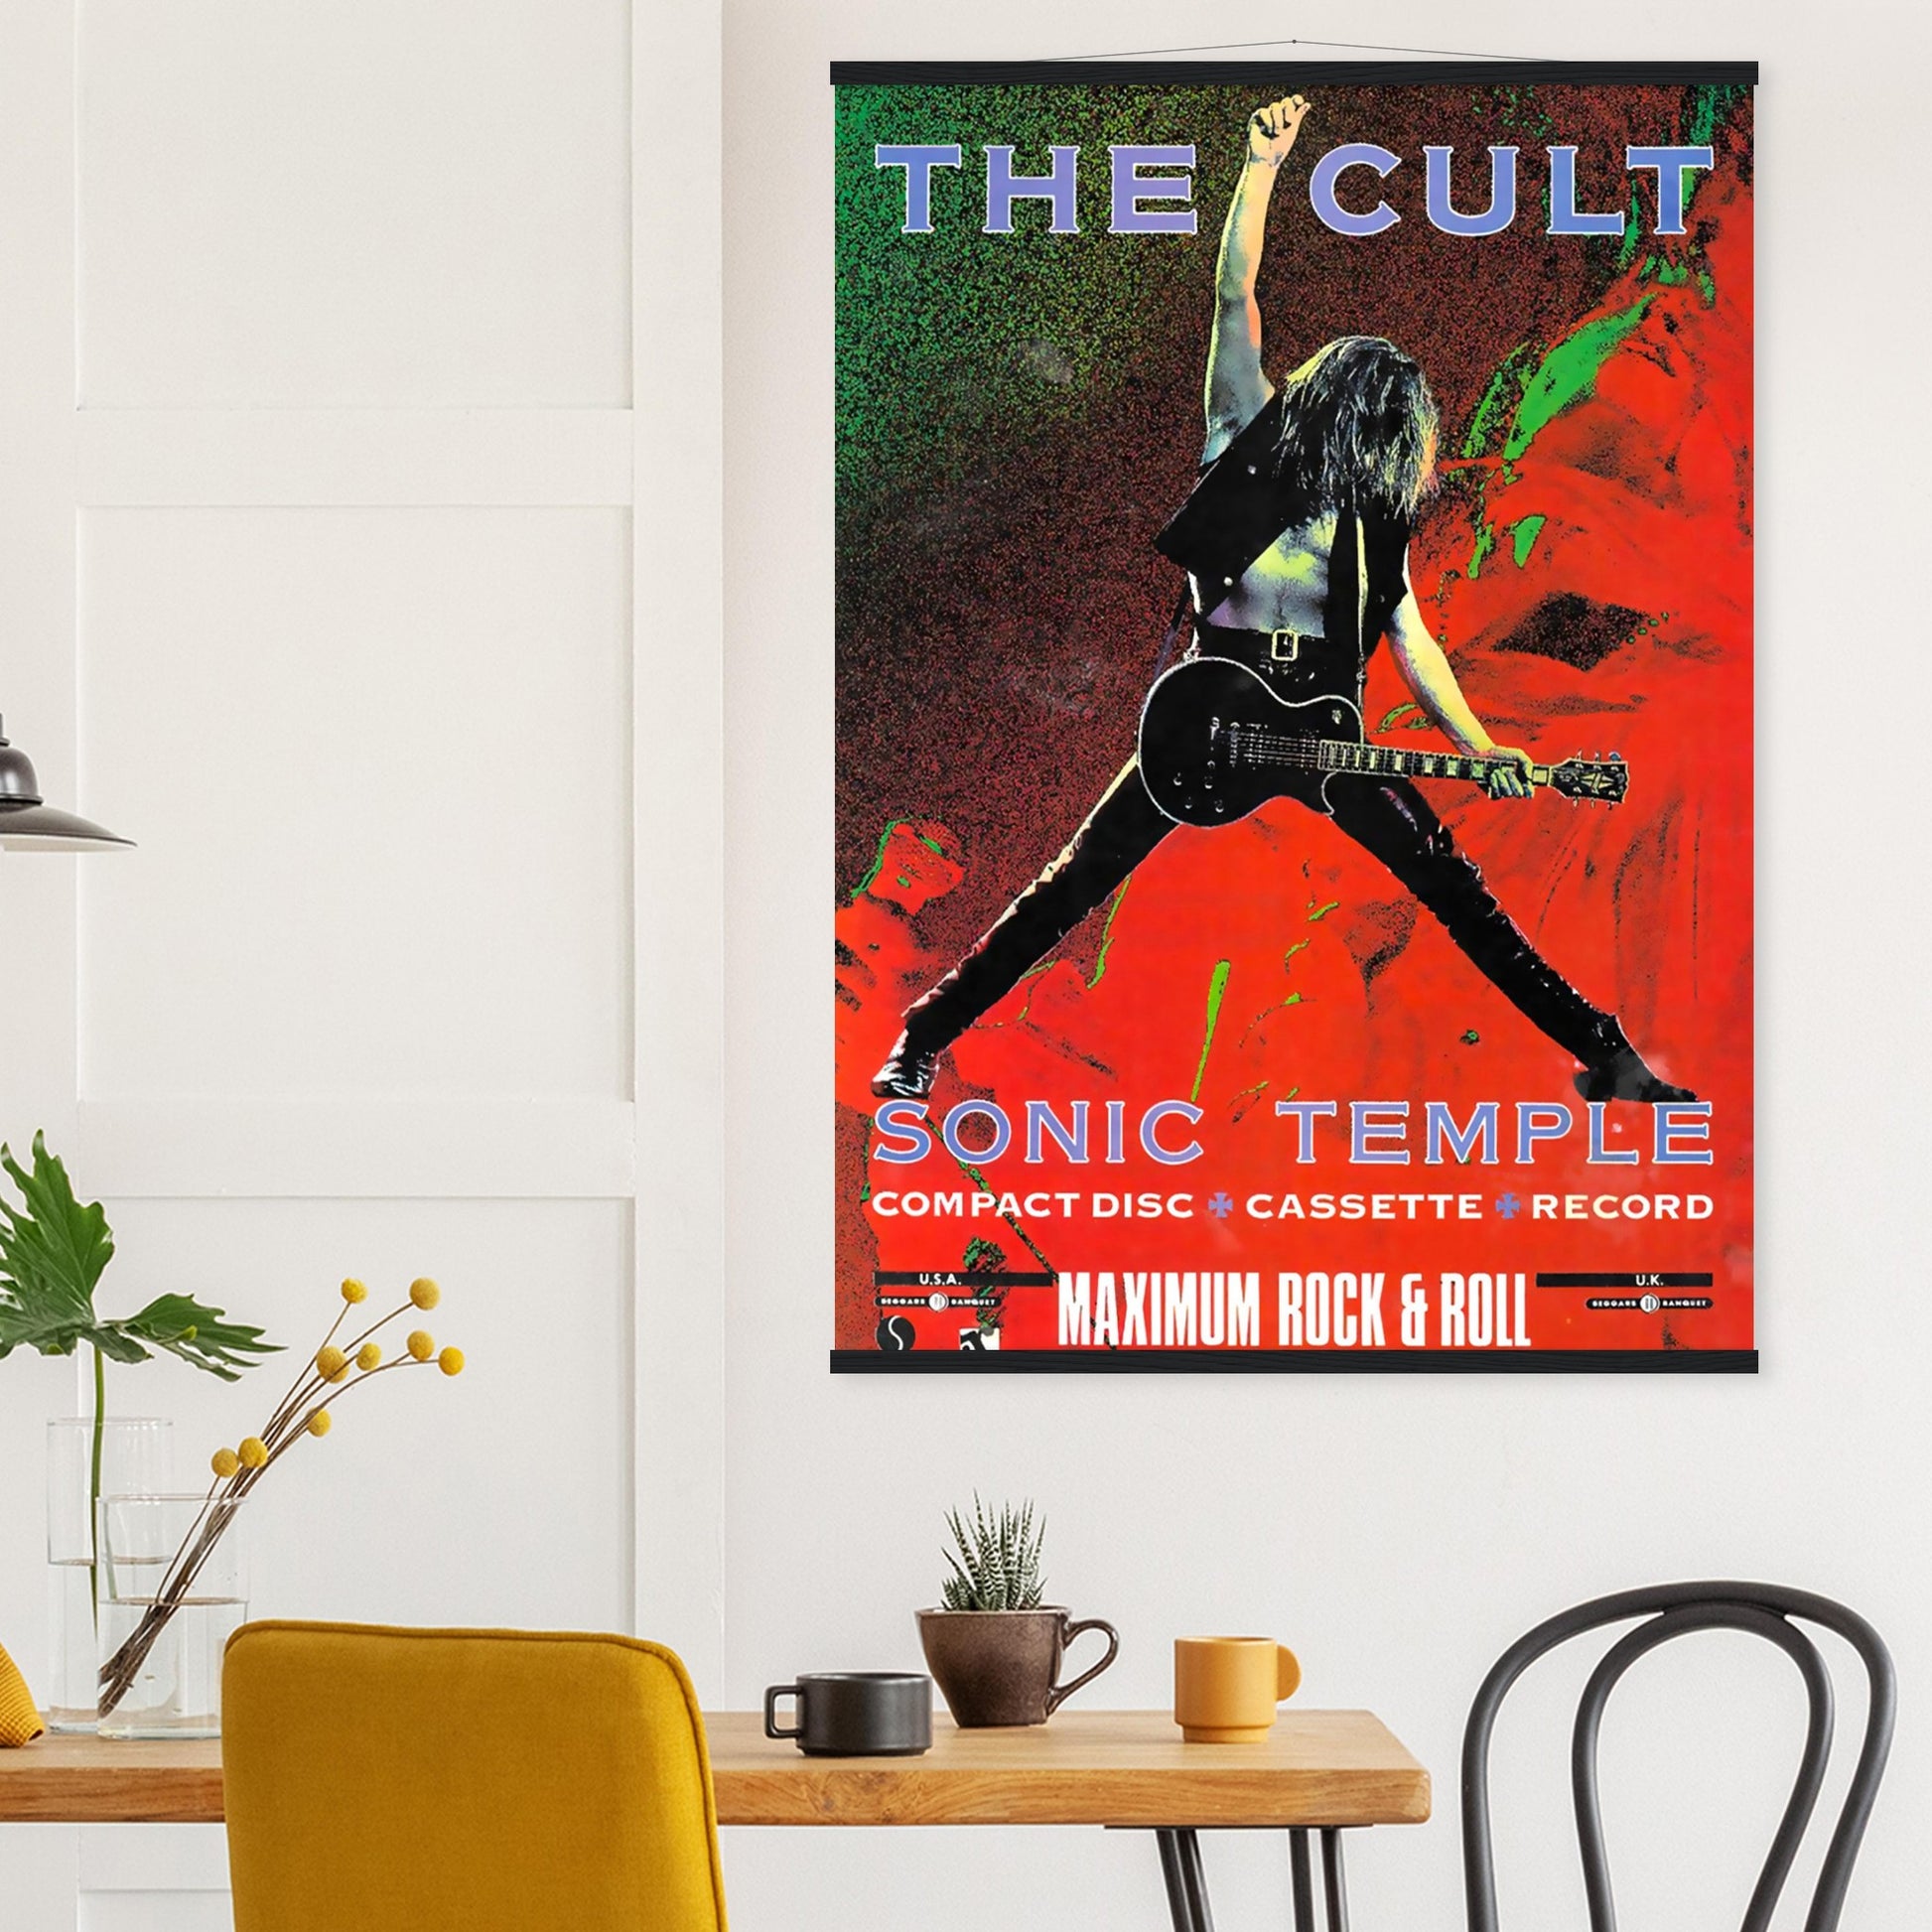 The Cult Vintage Poster Reprint on Premium Matte Paper - Posterify